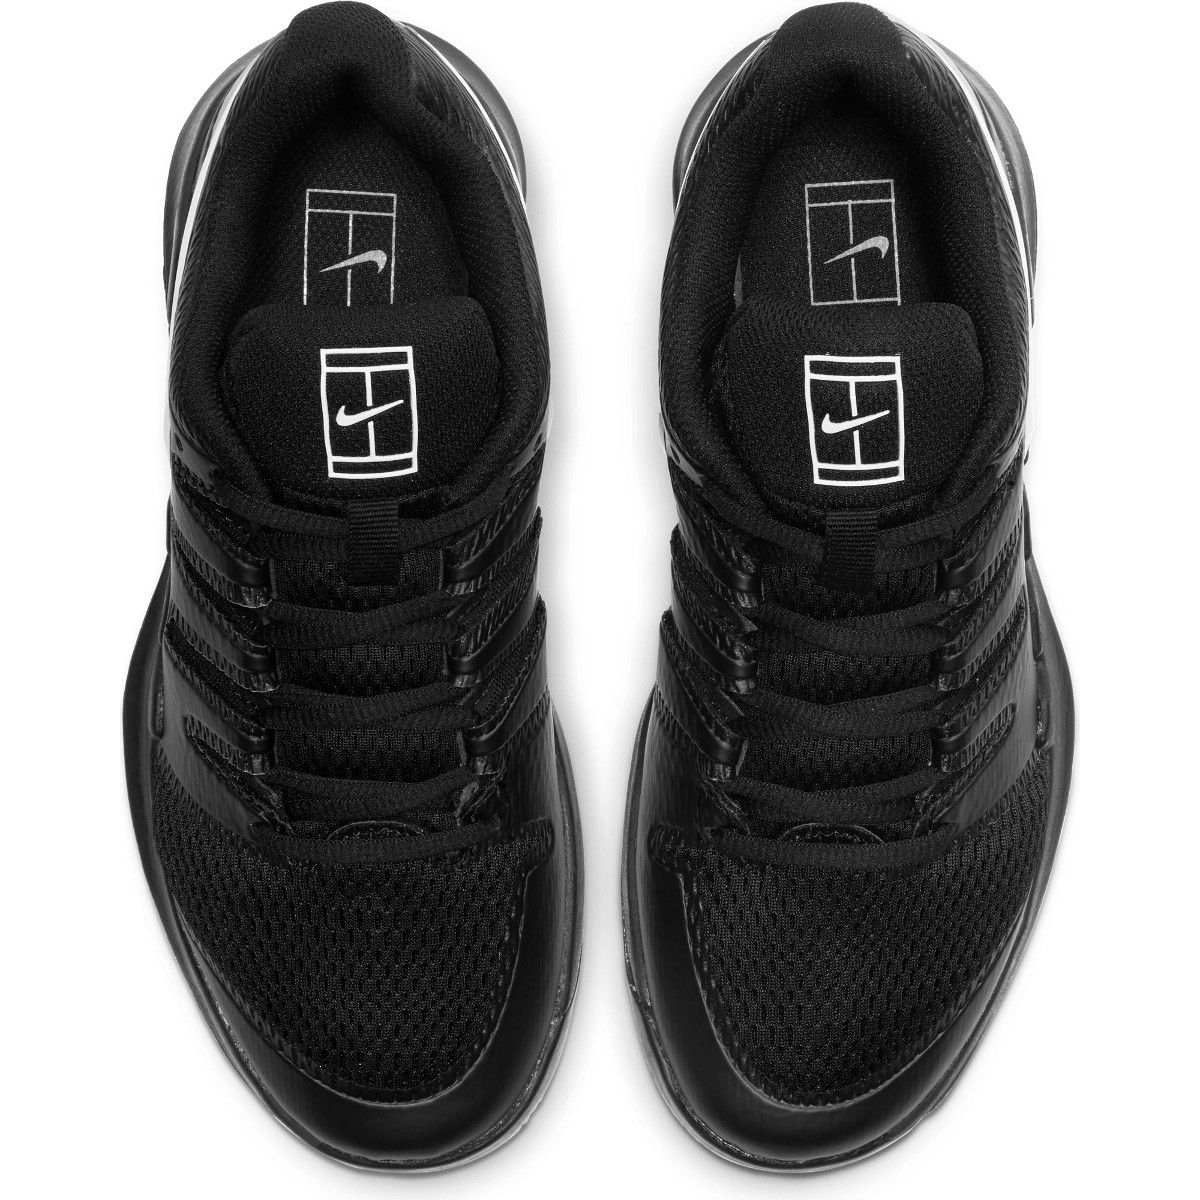 NikeCourt Vapor X Junior Tennis Shoes AR8851-009